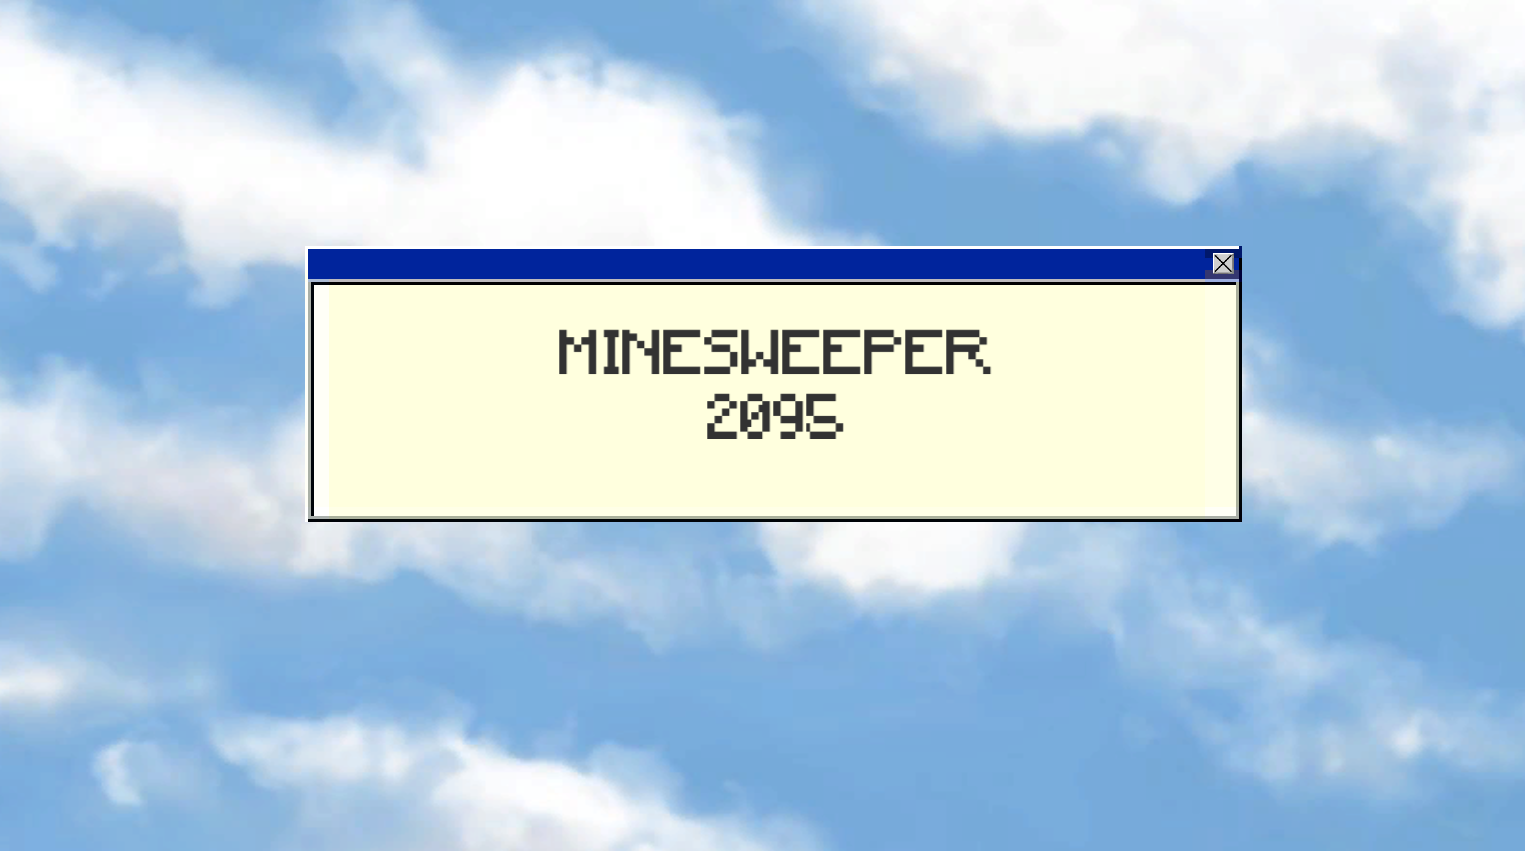 Minesweeper 2095